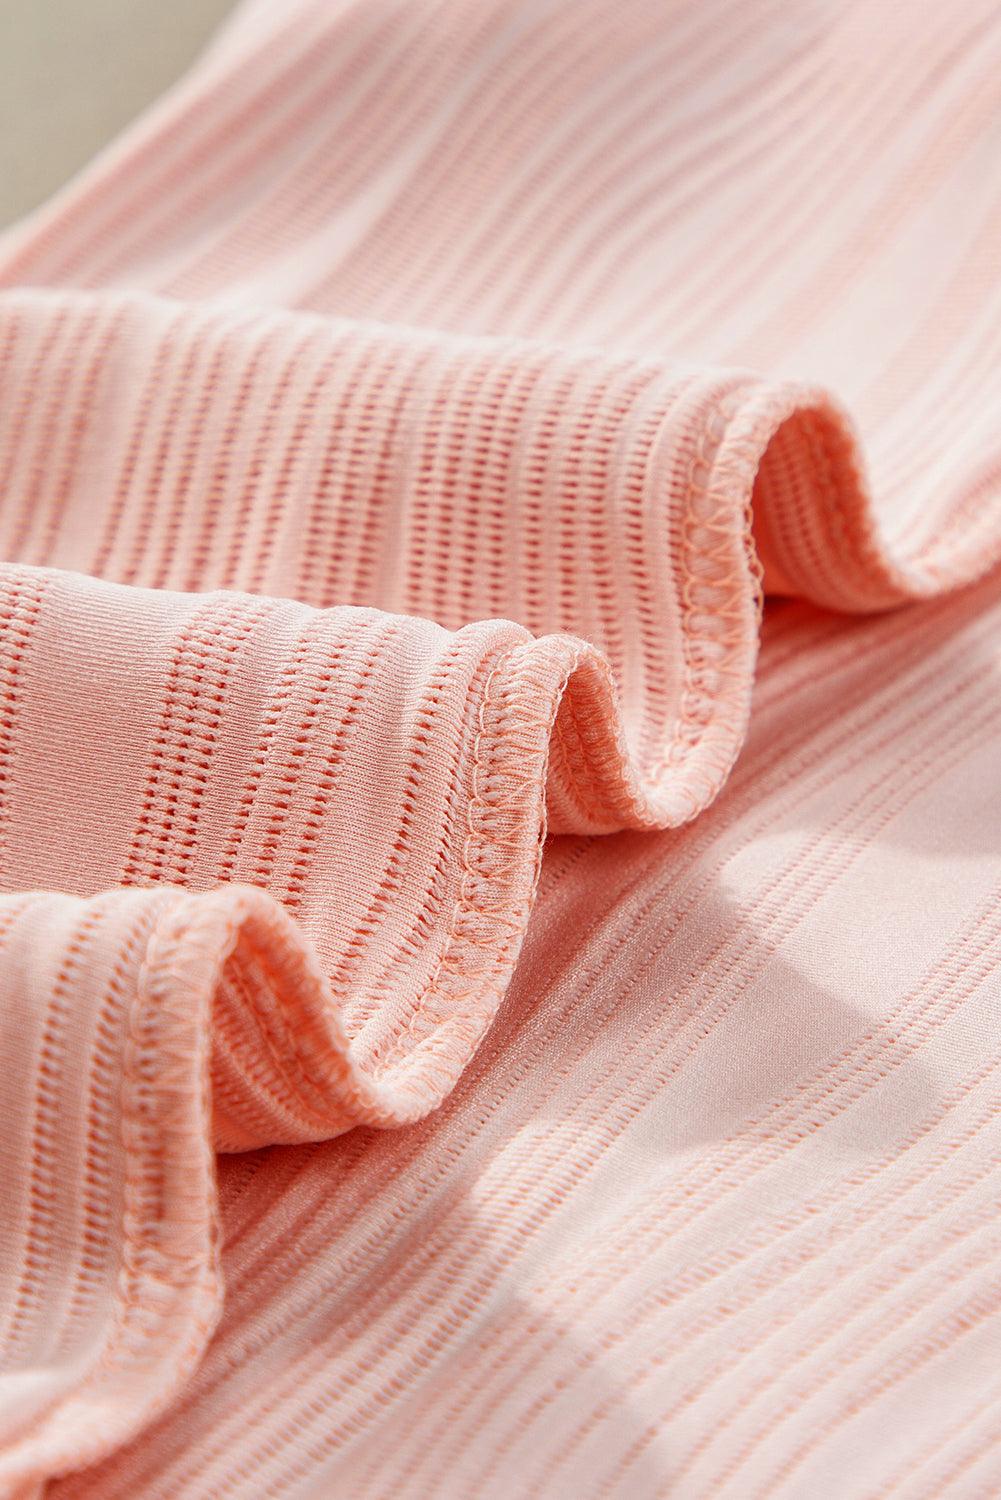 Wavy Texture Cap Sleeve Pink Top for Ladies